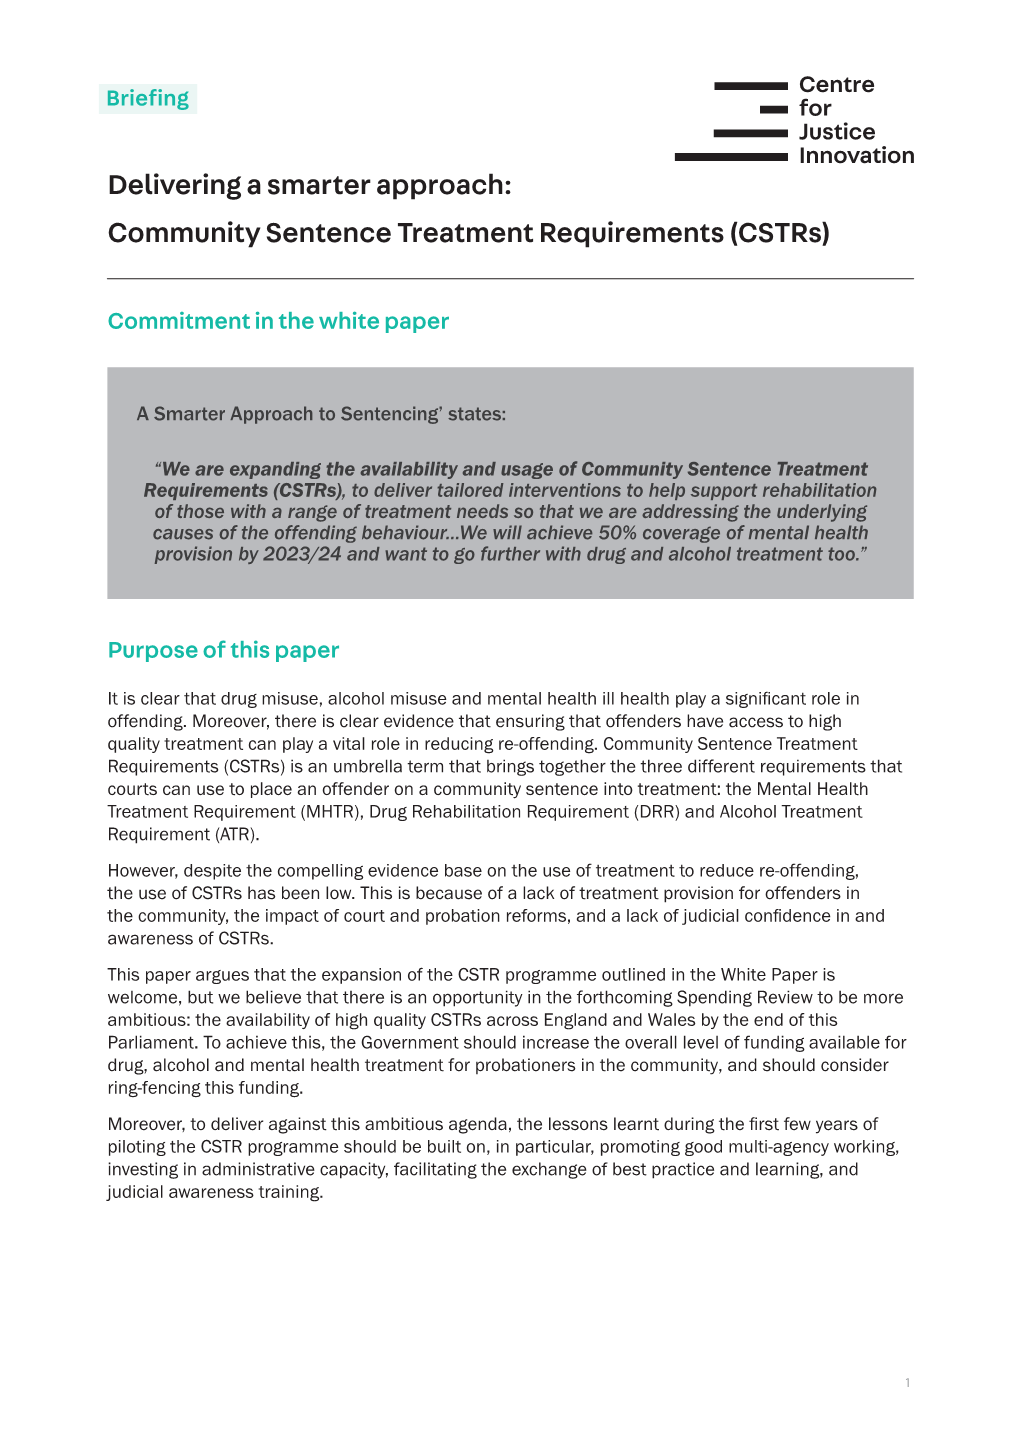 Community Sentence Treatment Requirements (Cstrs)